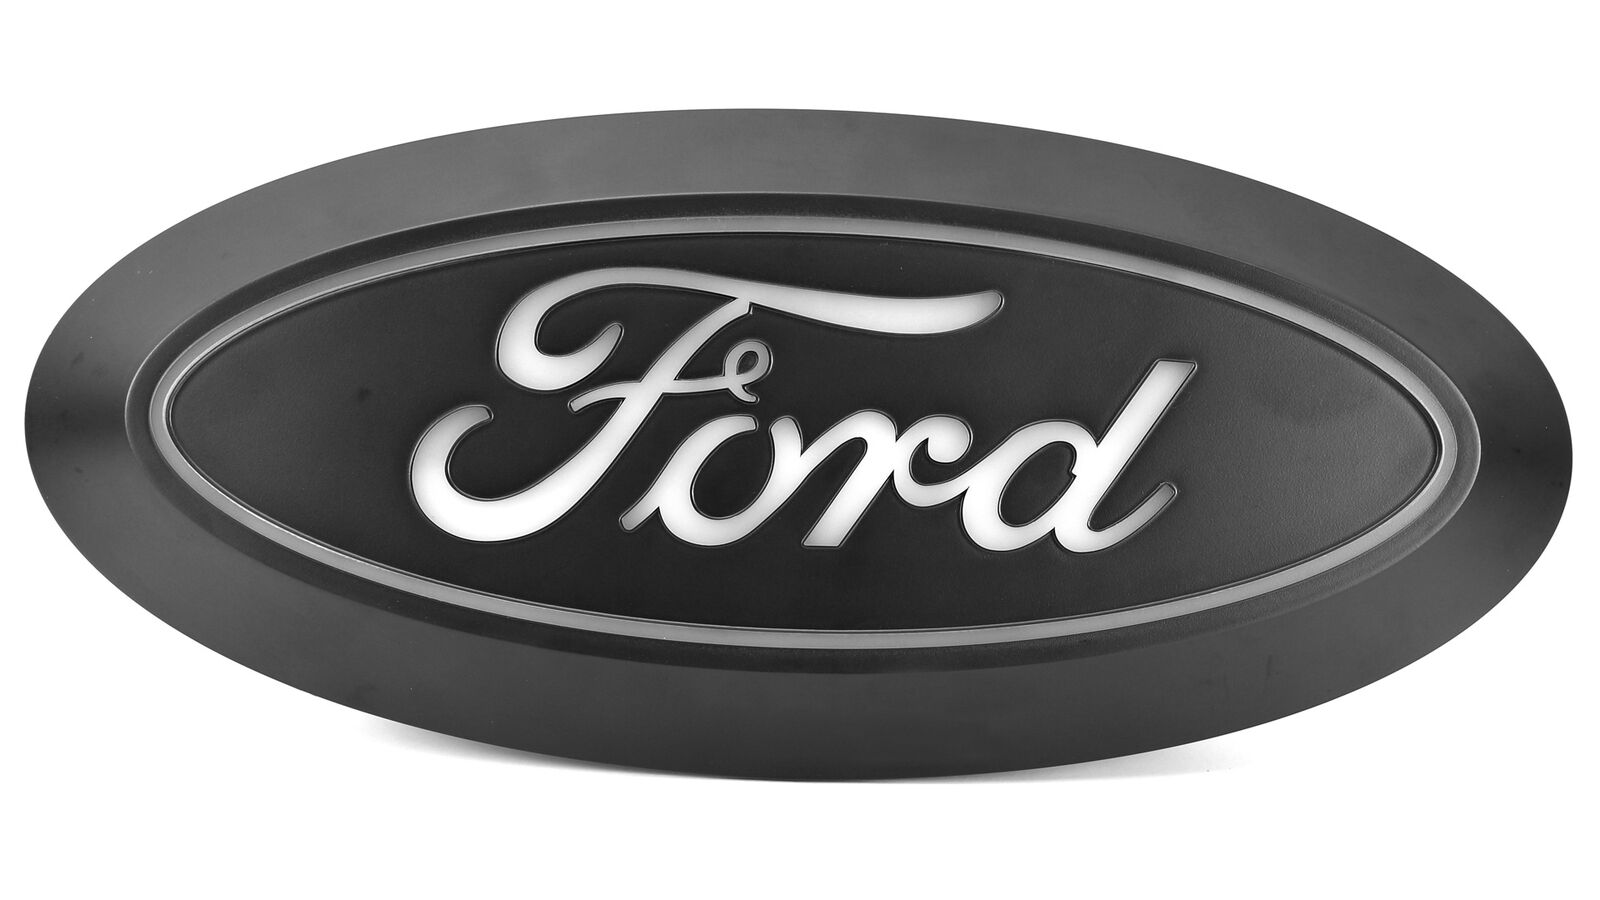 https://thehidfactory.com/wp-content/uploads/2020/02/Ford-LED-Grille-Emblem.jpg